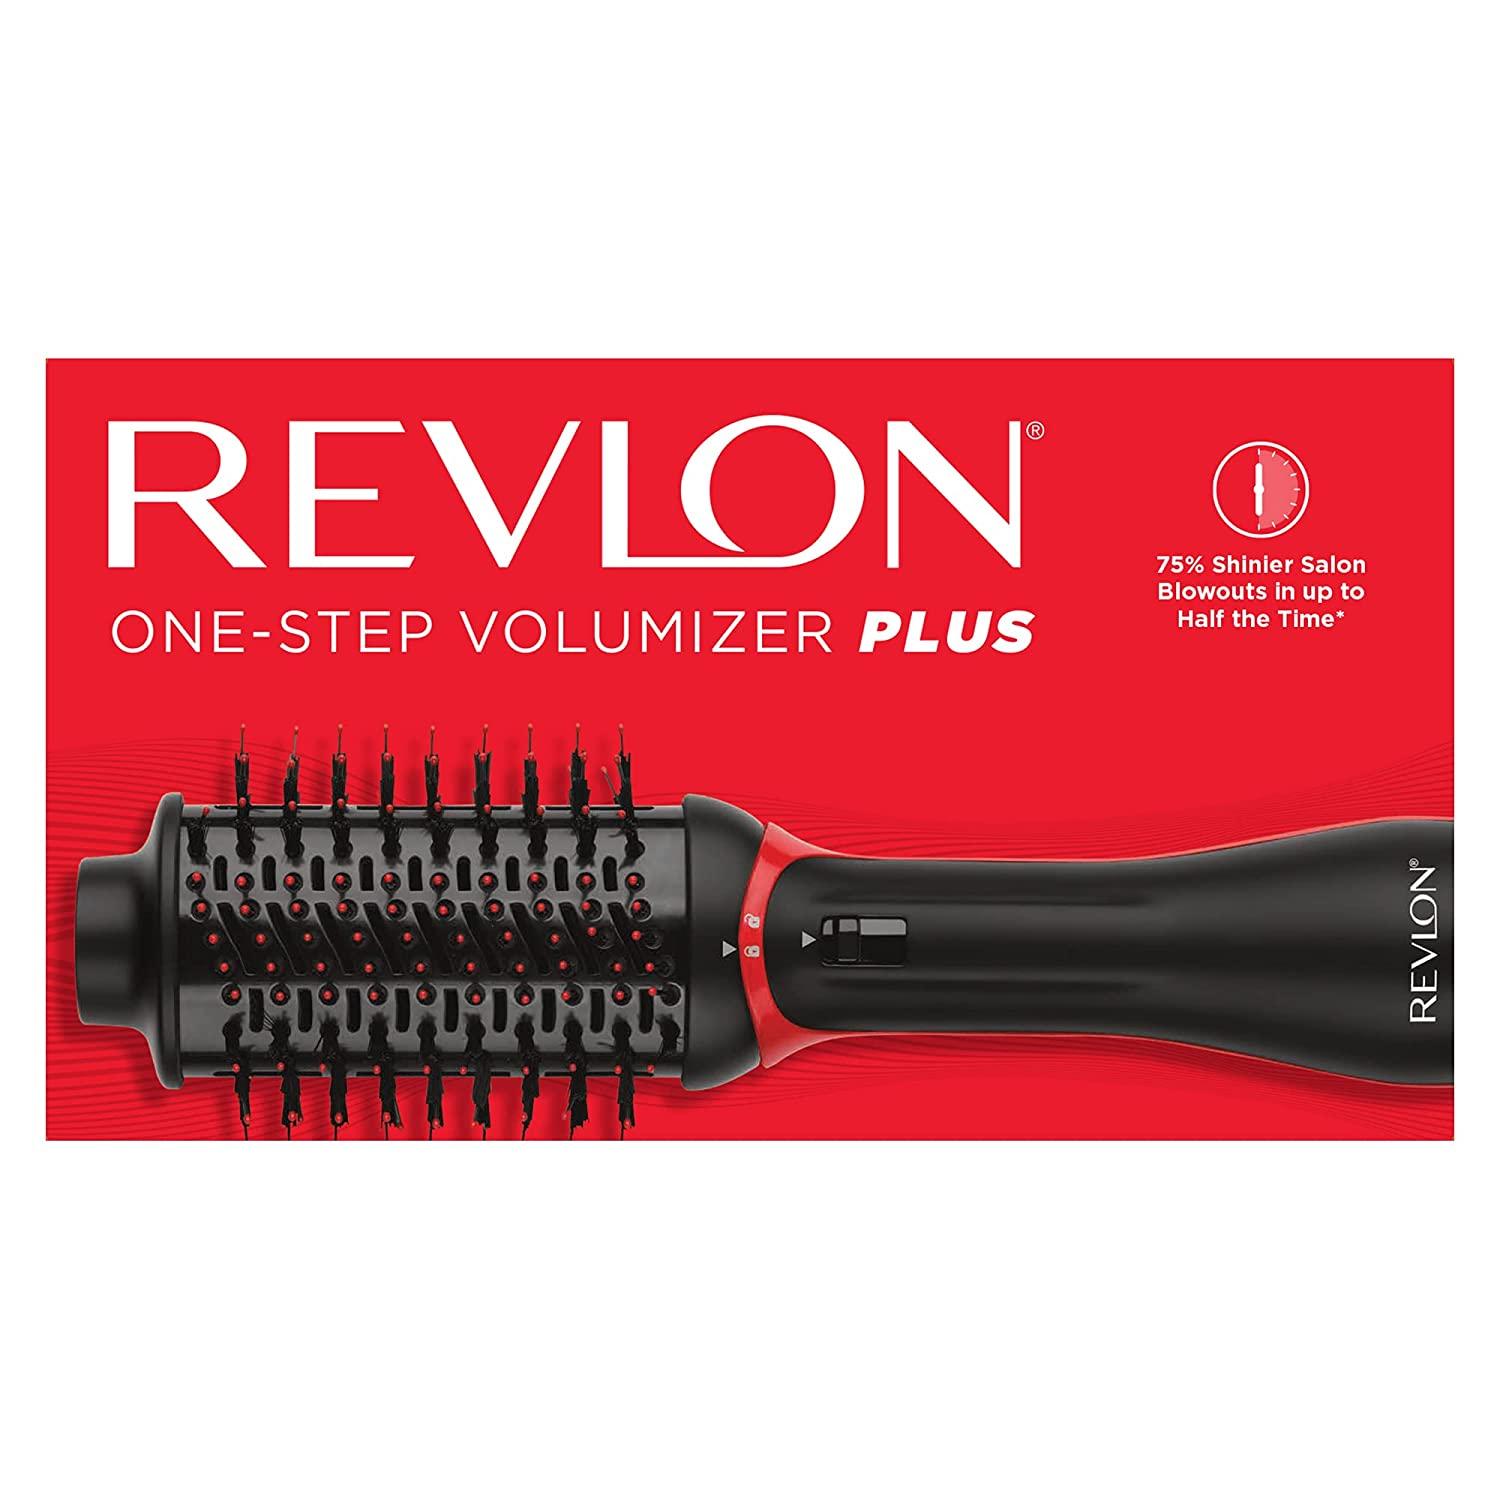 REVLON One-Step Volumizer PLUS  Hair Dryer and Hot Air Brush, Black   PLUS BLACK